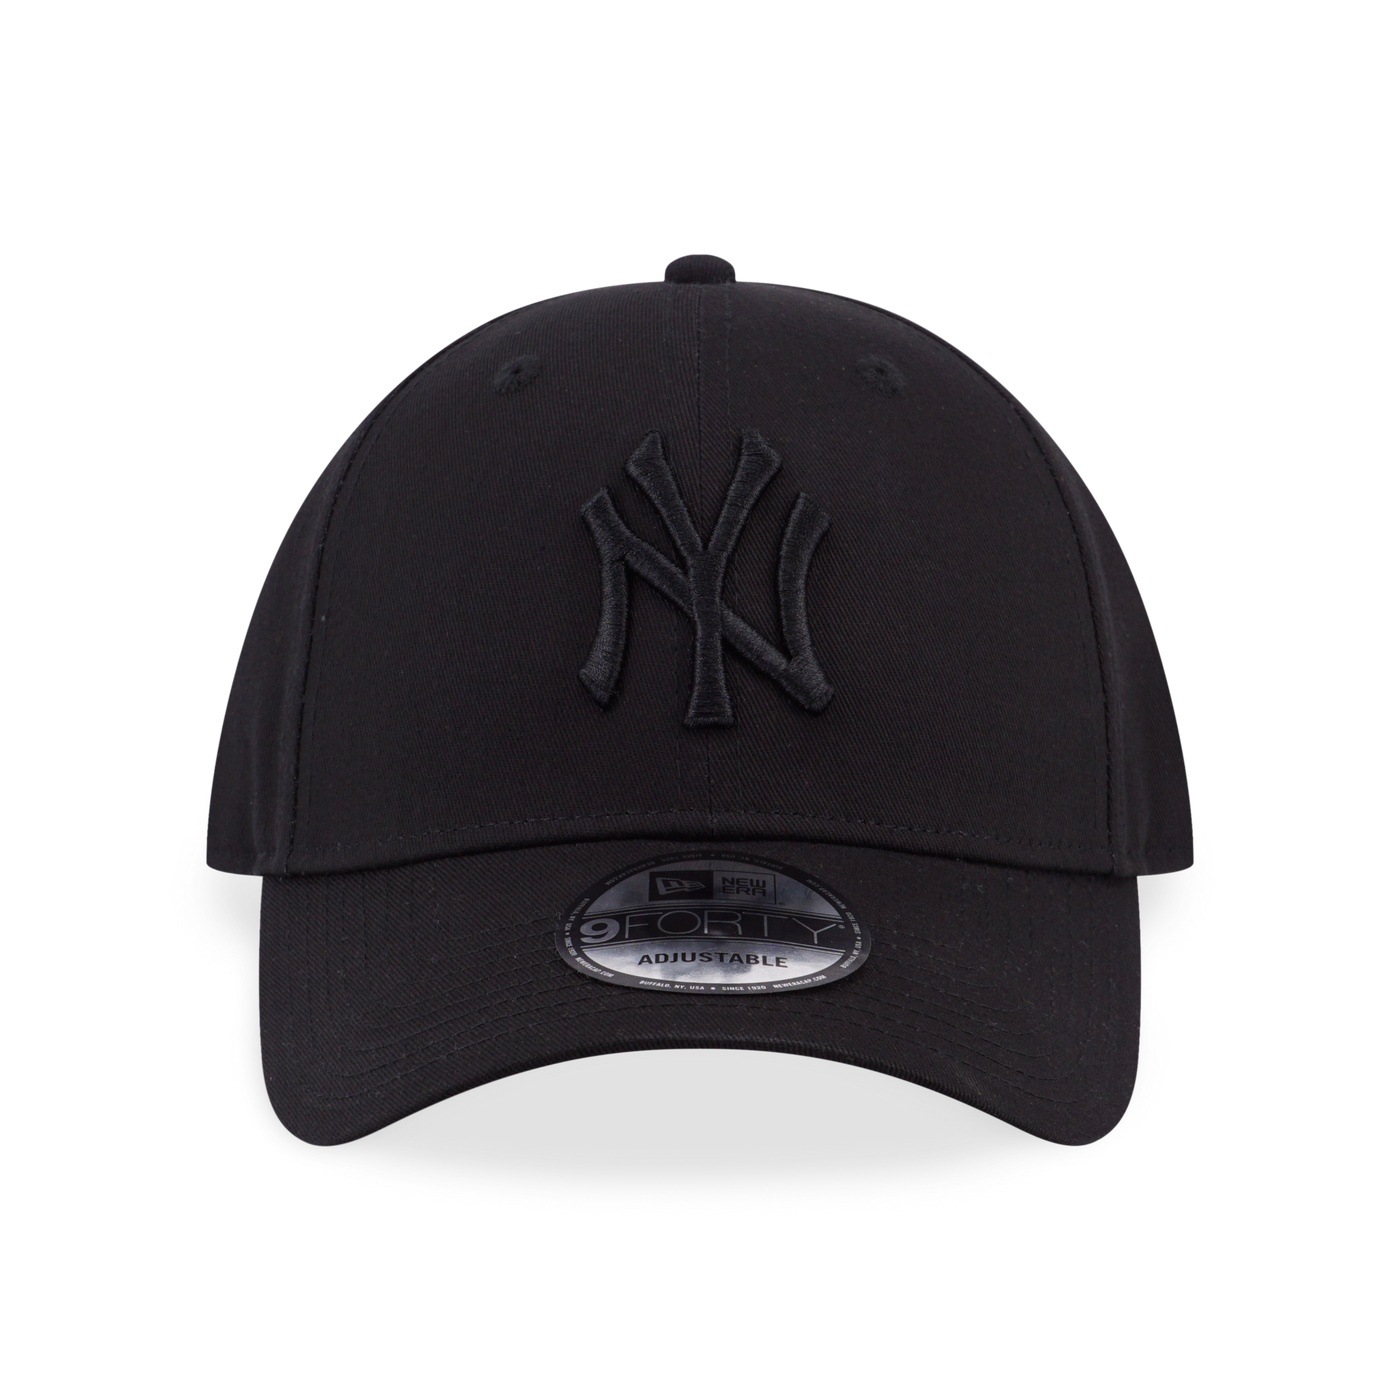 NEW YORK YANKEES BLACK 9FORTY CAP